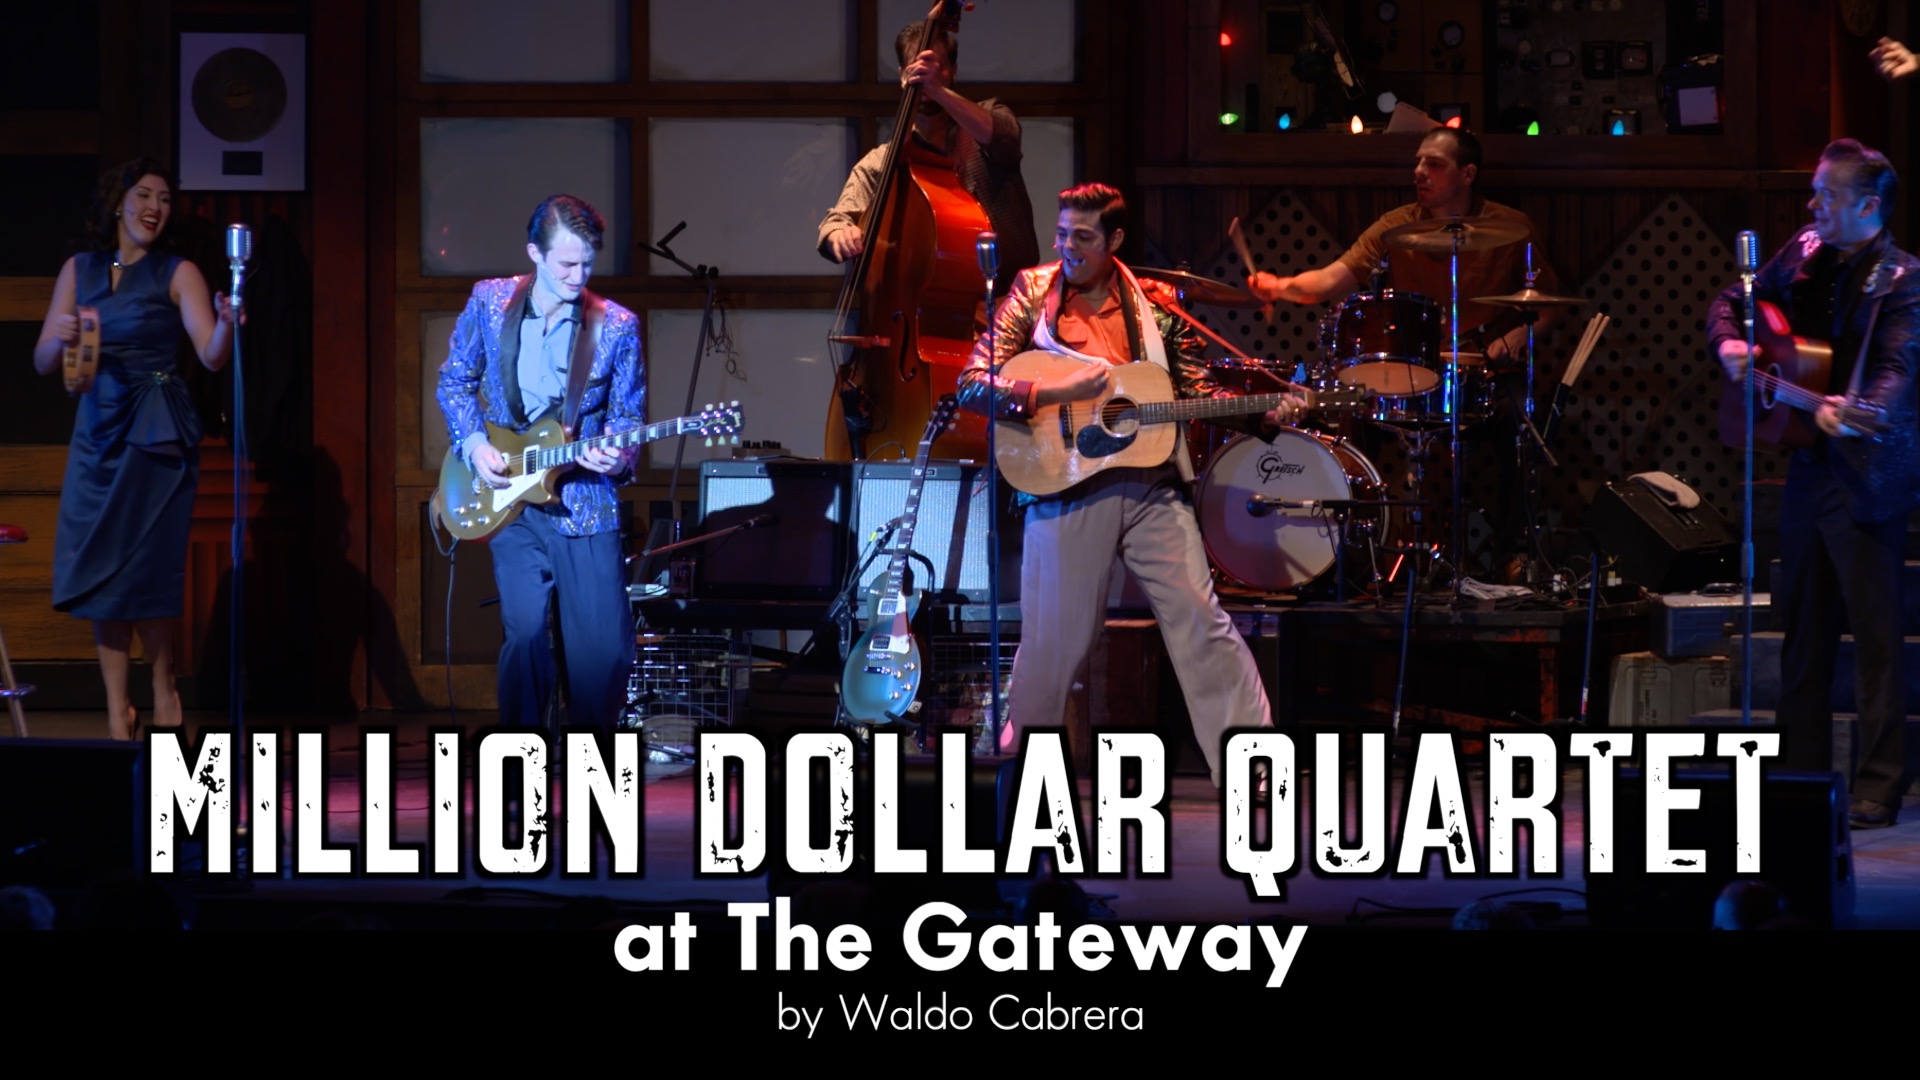 Meet The Cast of Million Dollar Quartet at the Gateway 2021